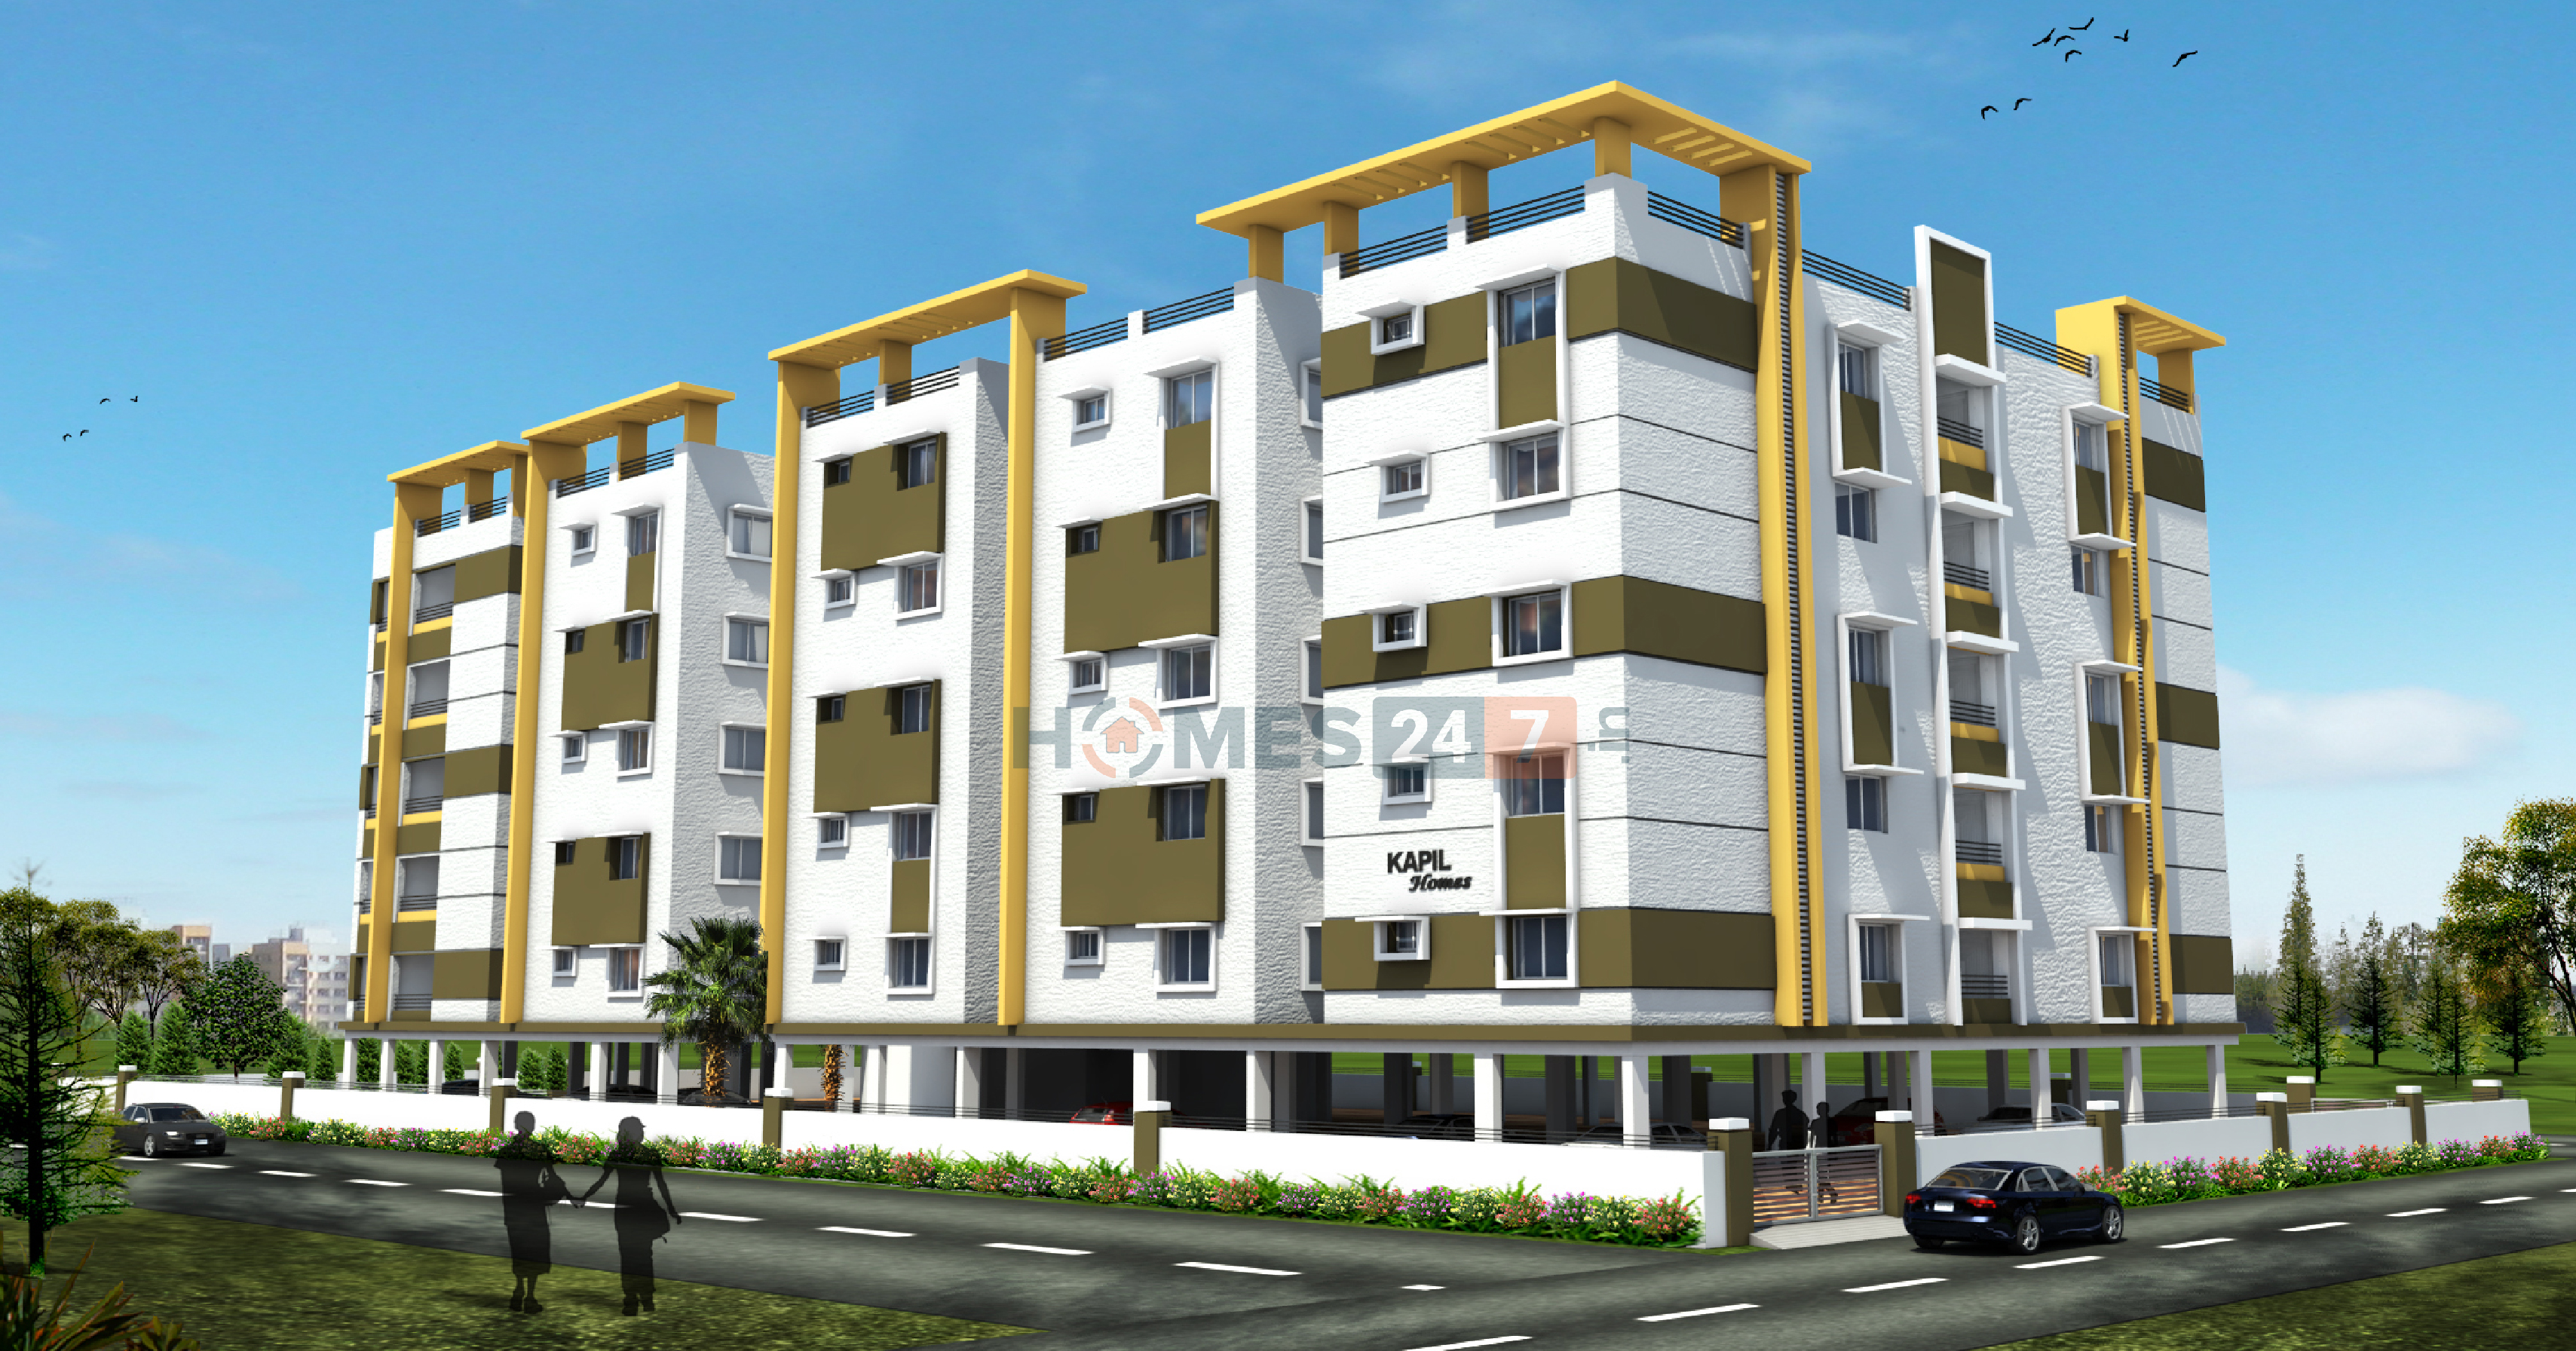 Kapil Kausalya Apartment Block 2-cover-06